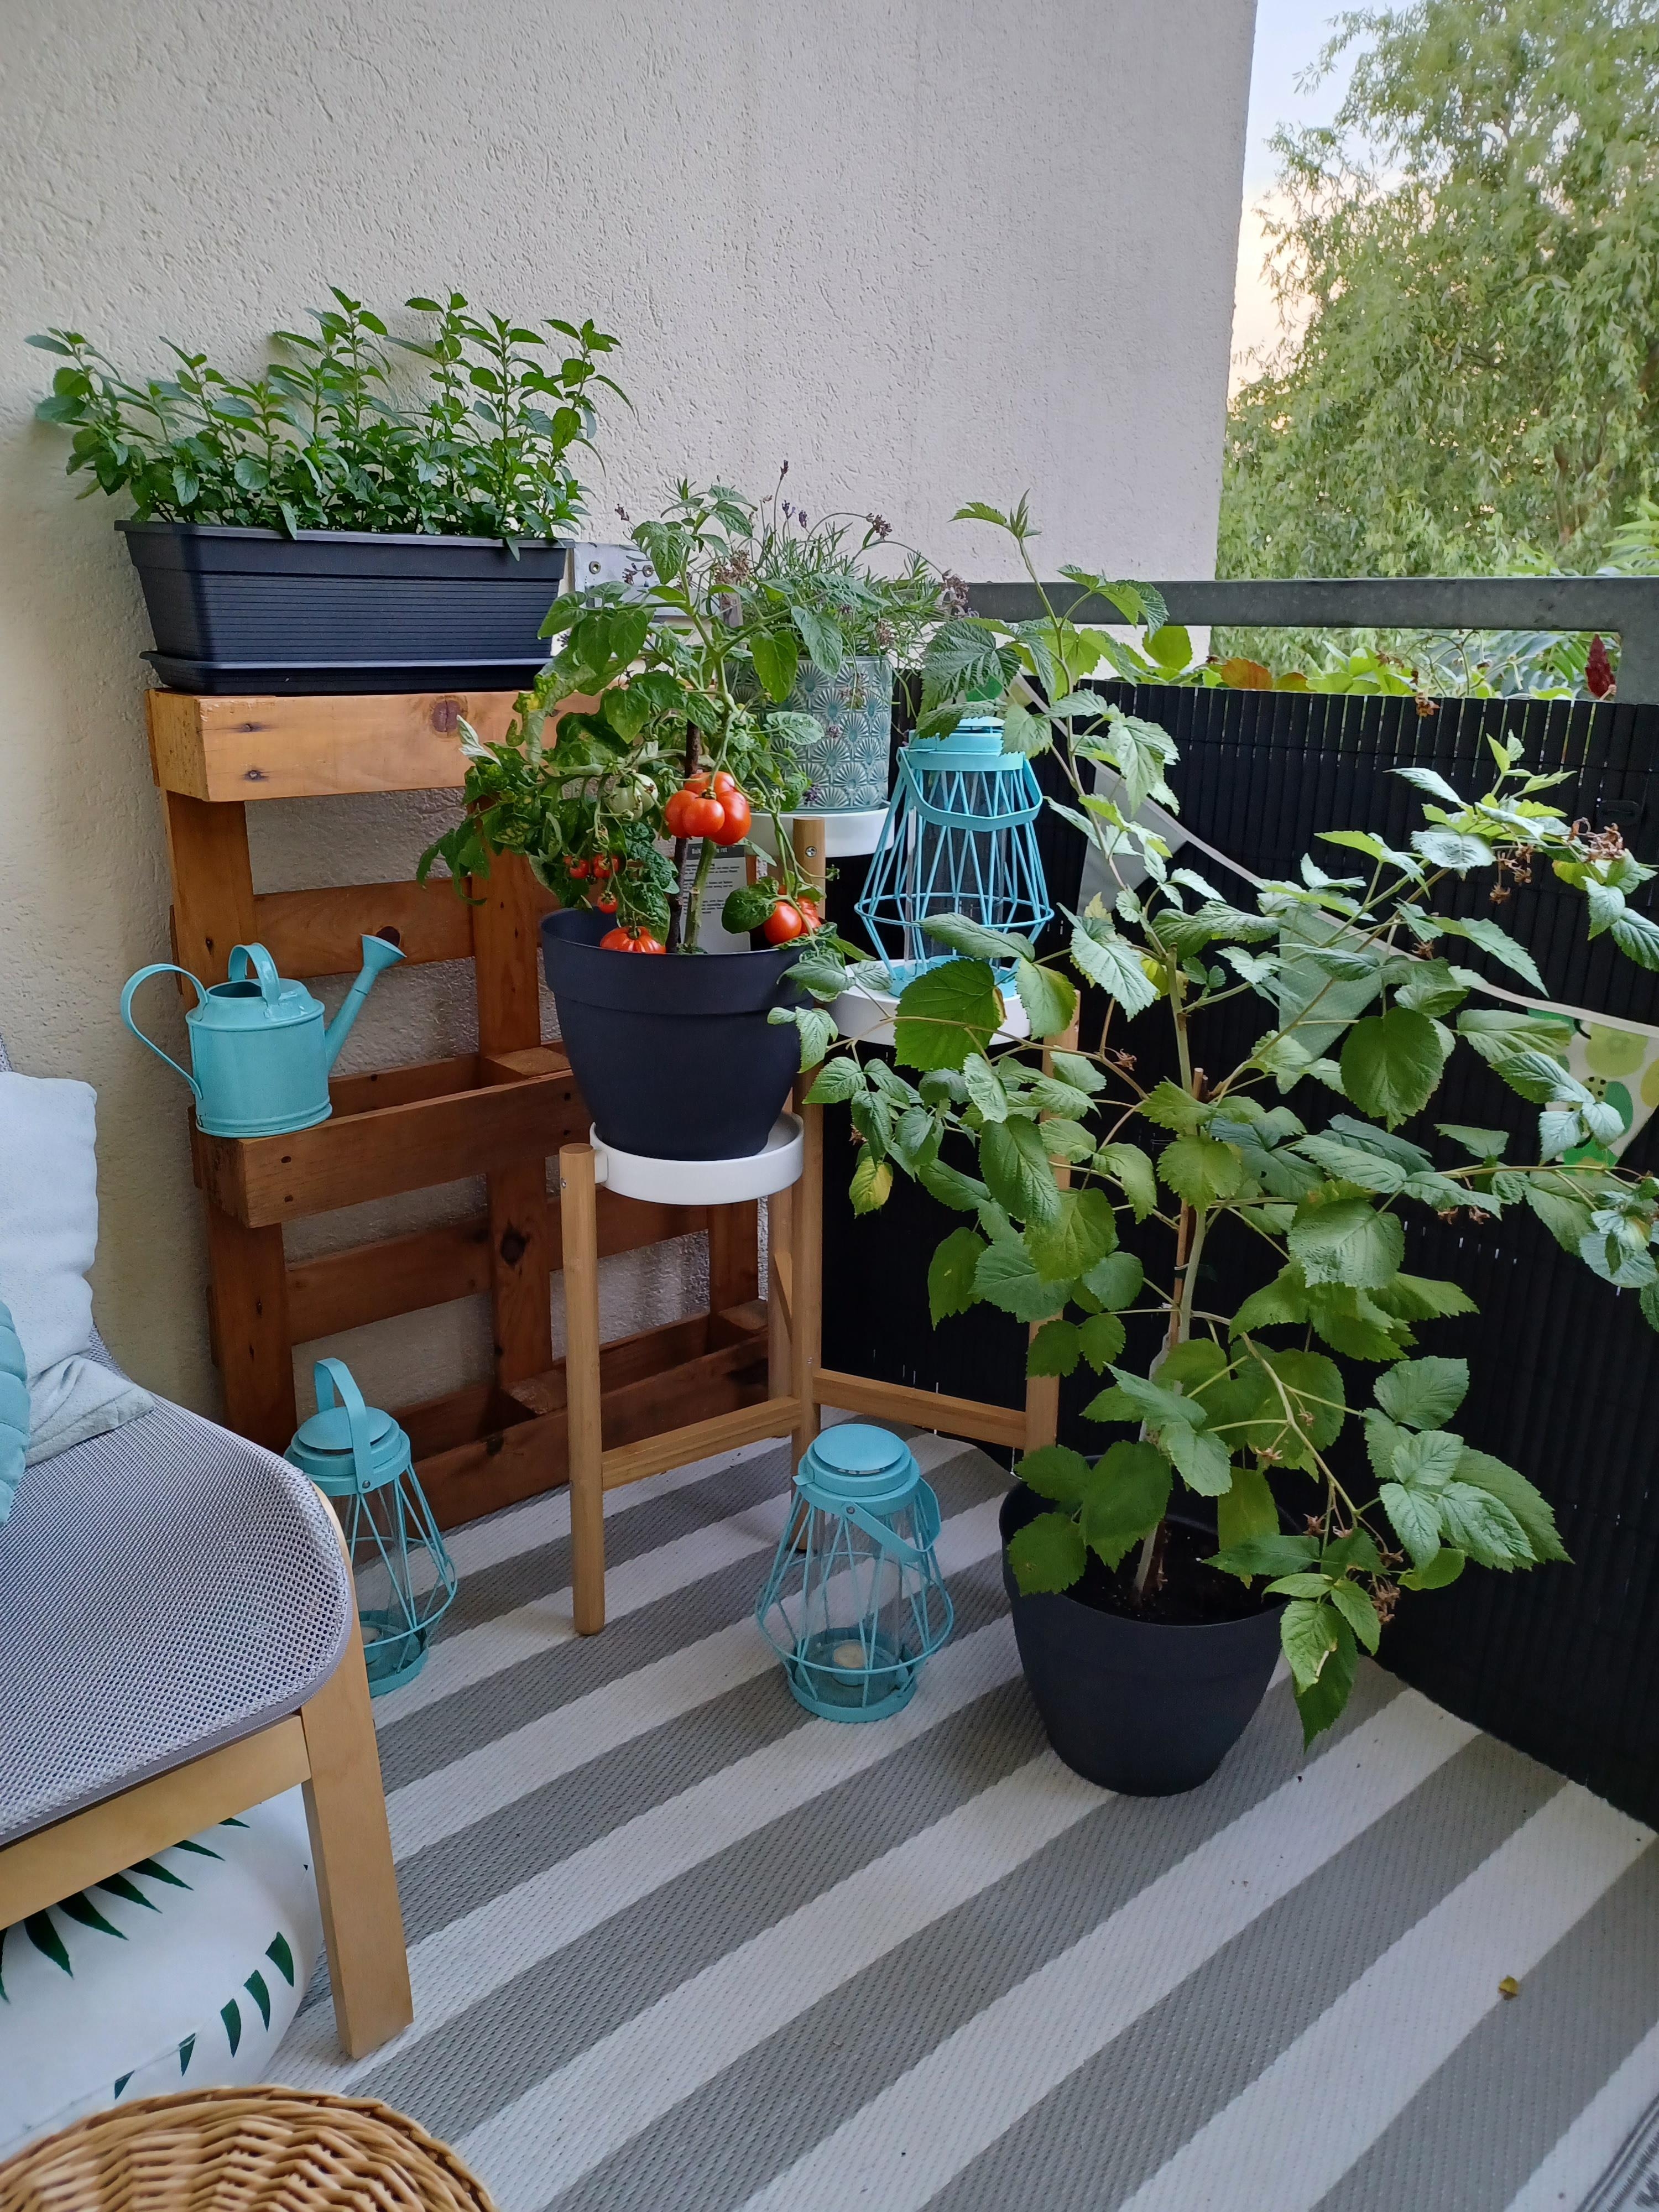 Balkon-Liebe 🌿
#outdoor #balcony #plants